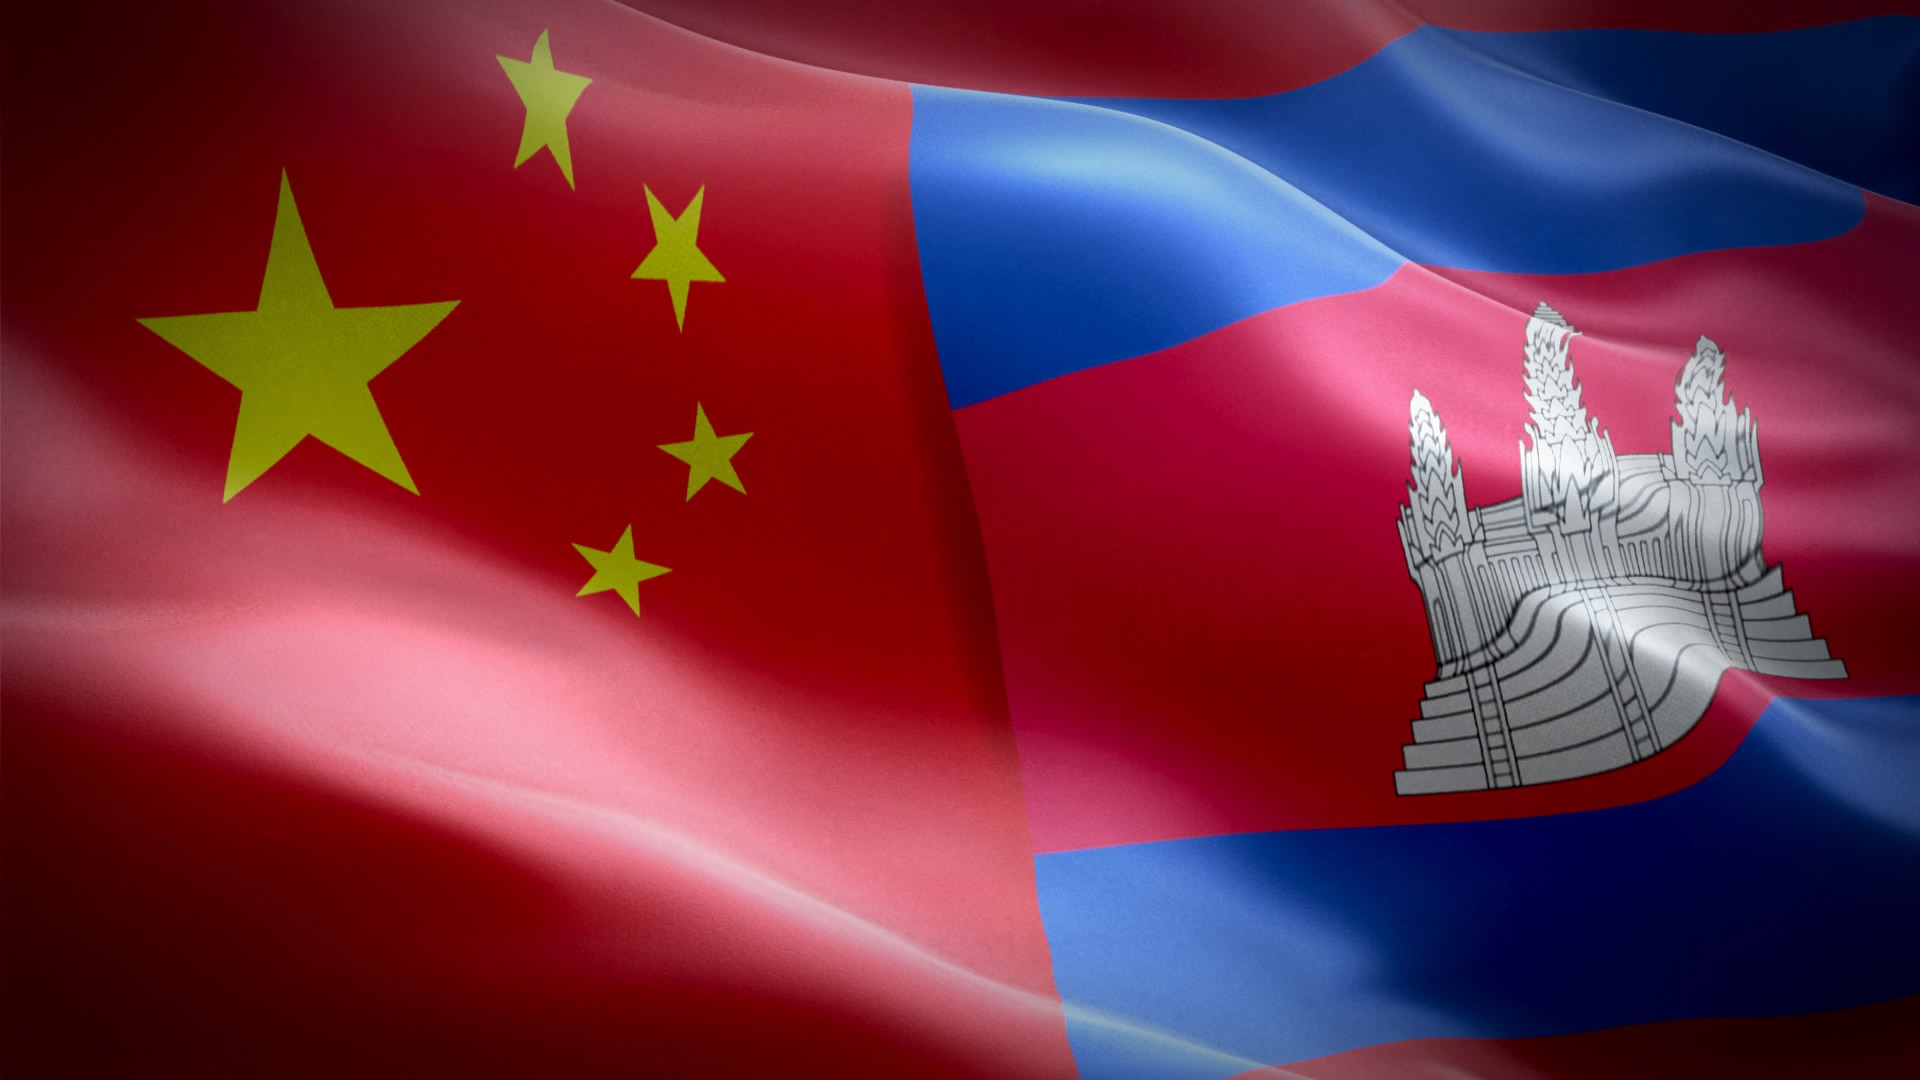 China & Cambodia Flags - Chinese And Cambodia Flag - HD Wallpaper 